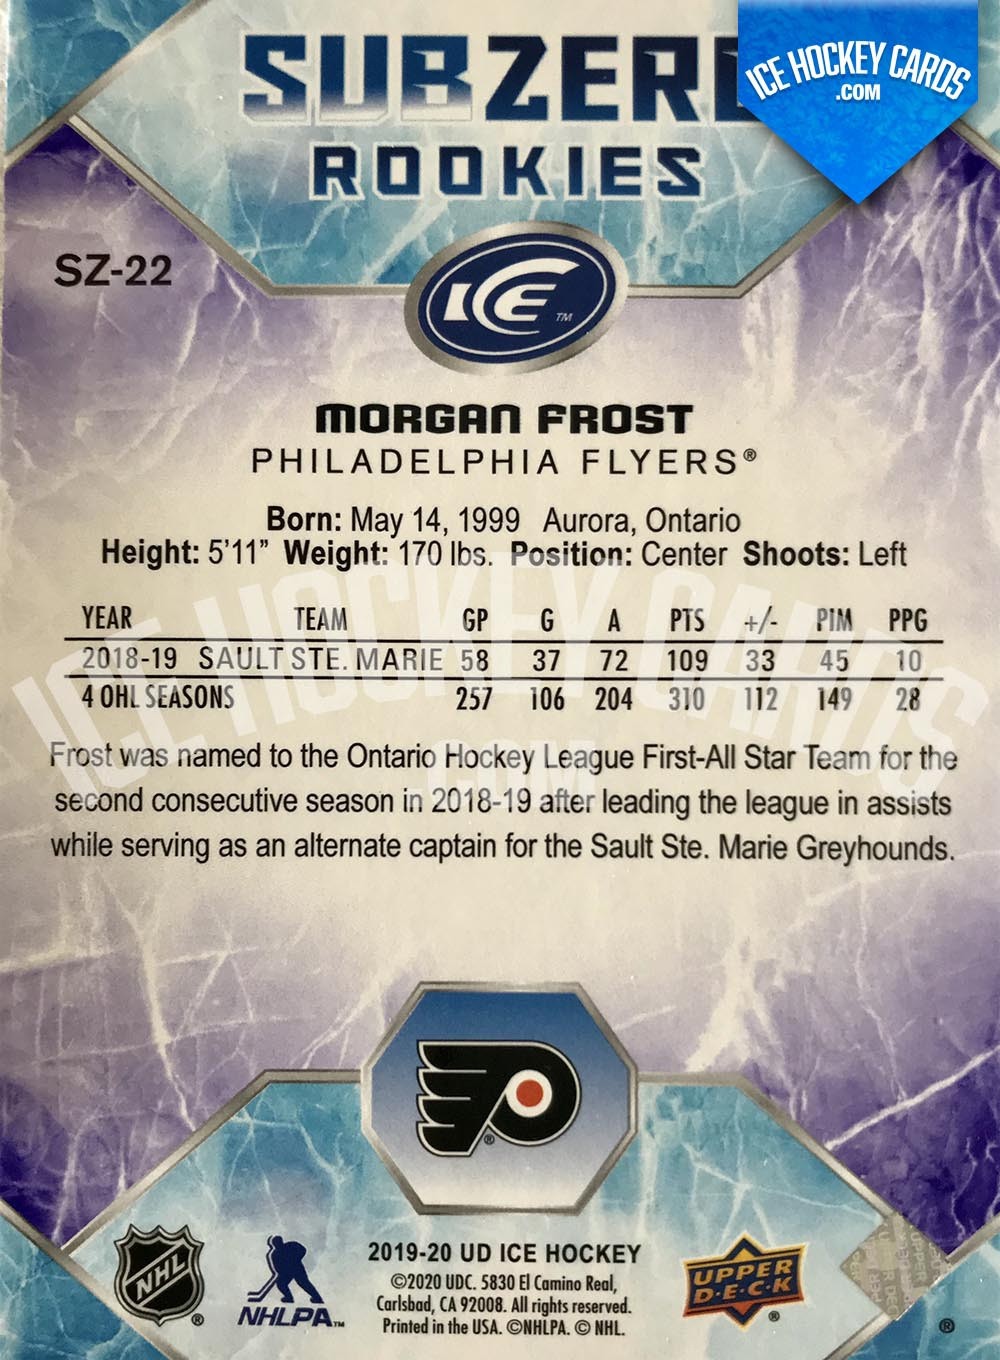 Upper Deck - ICE 2019-20 - Morgan Frost Subzero Rookies Card back